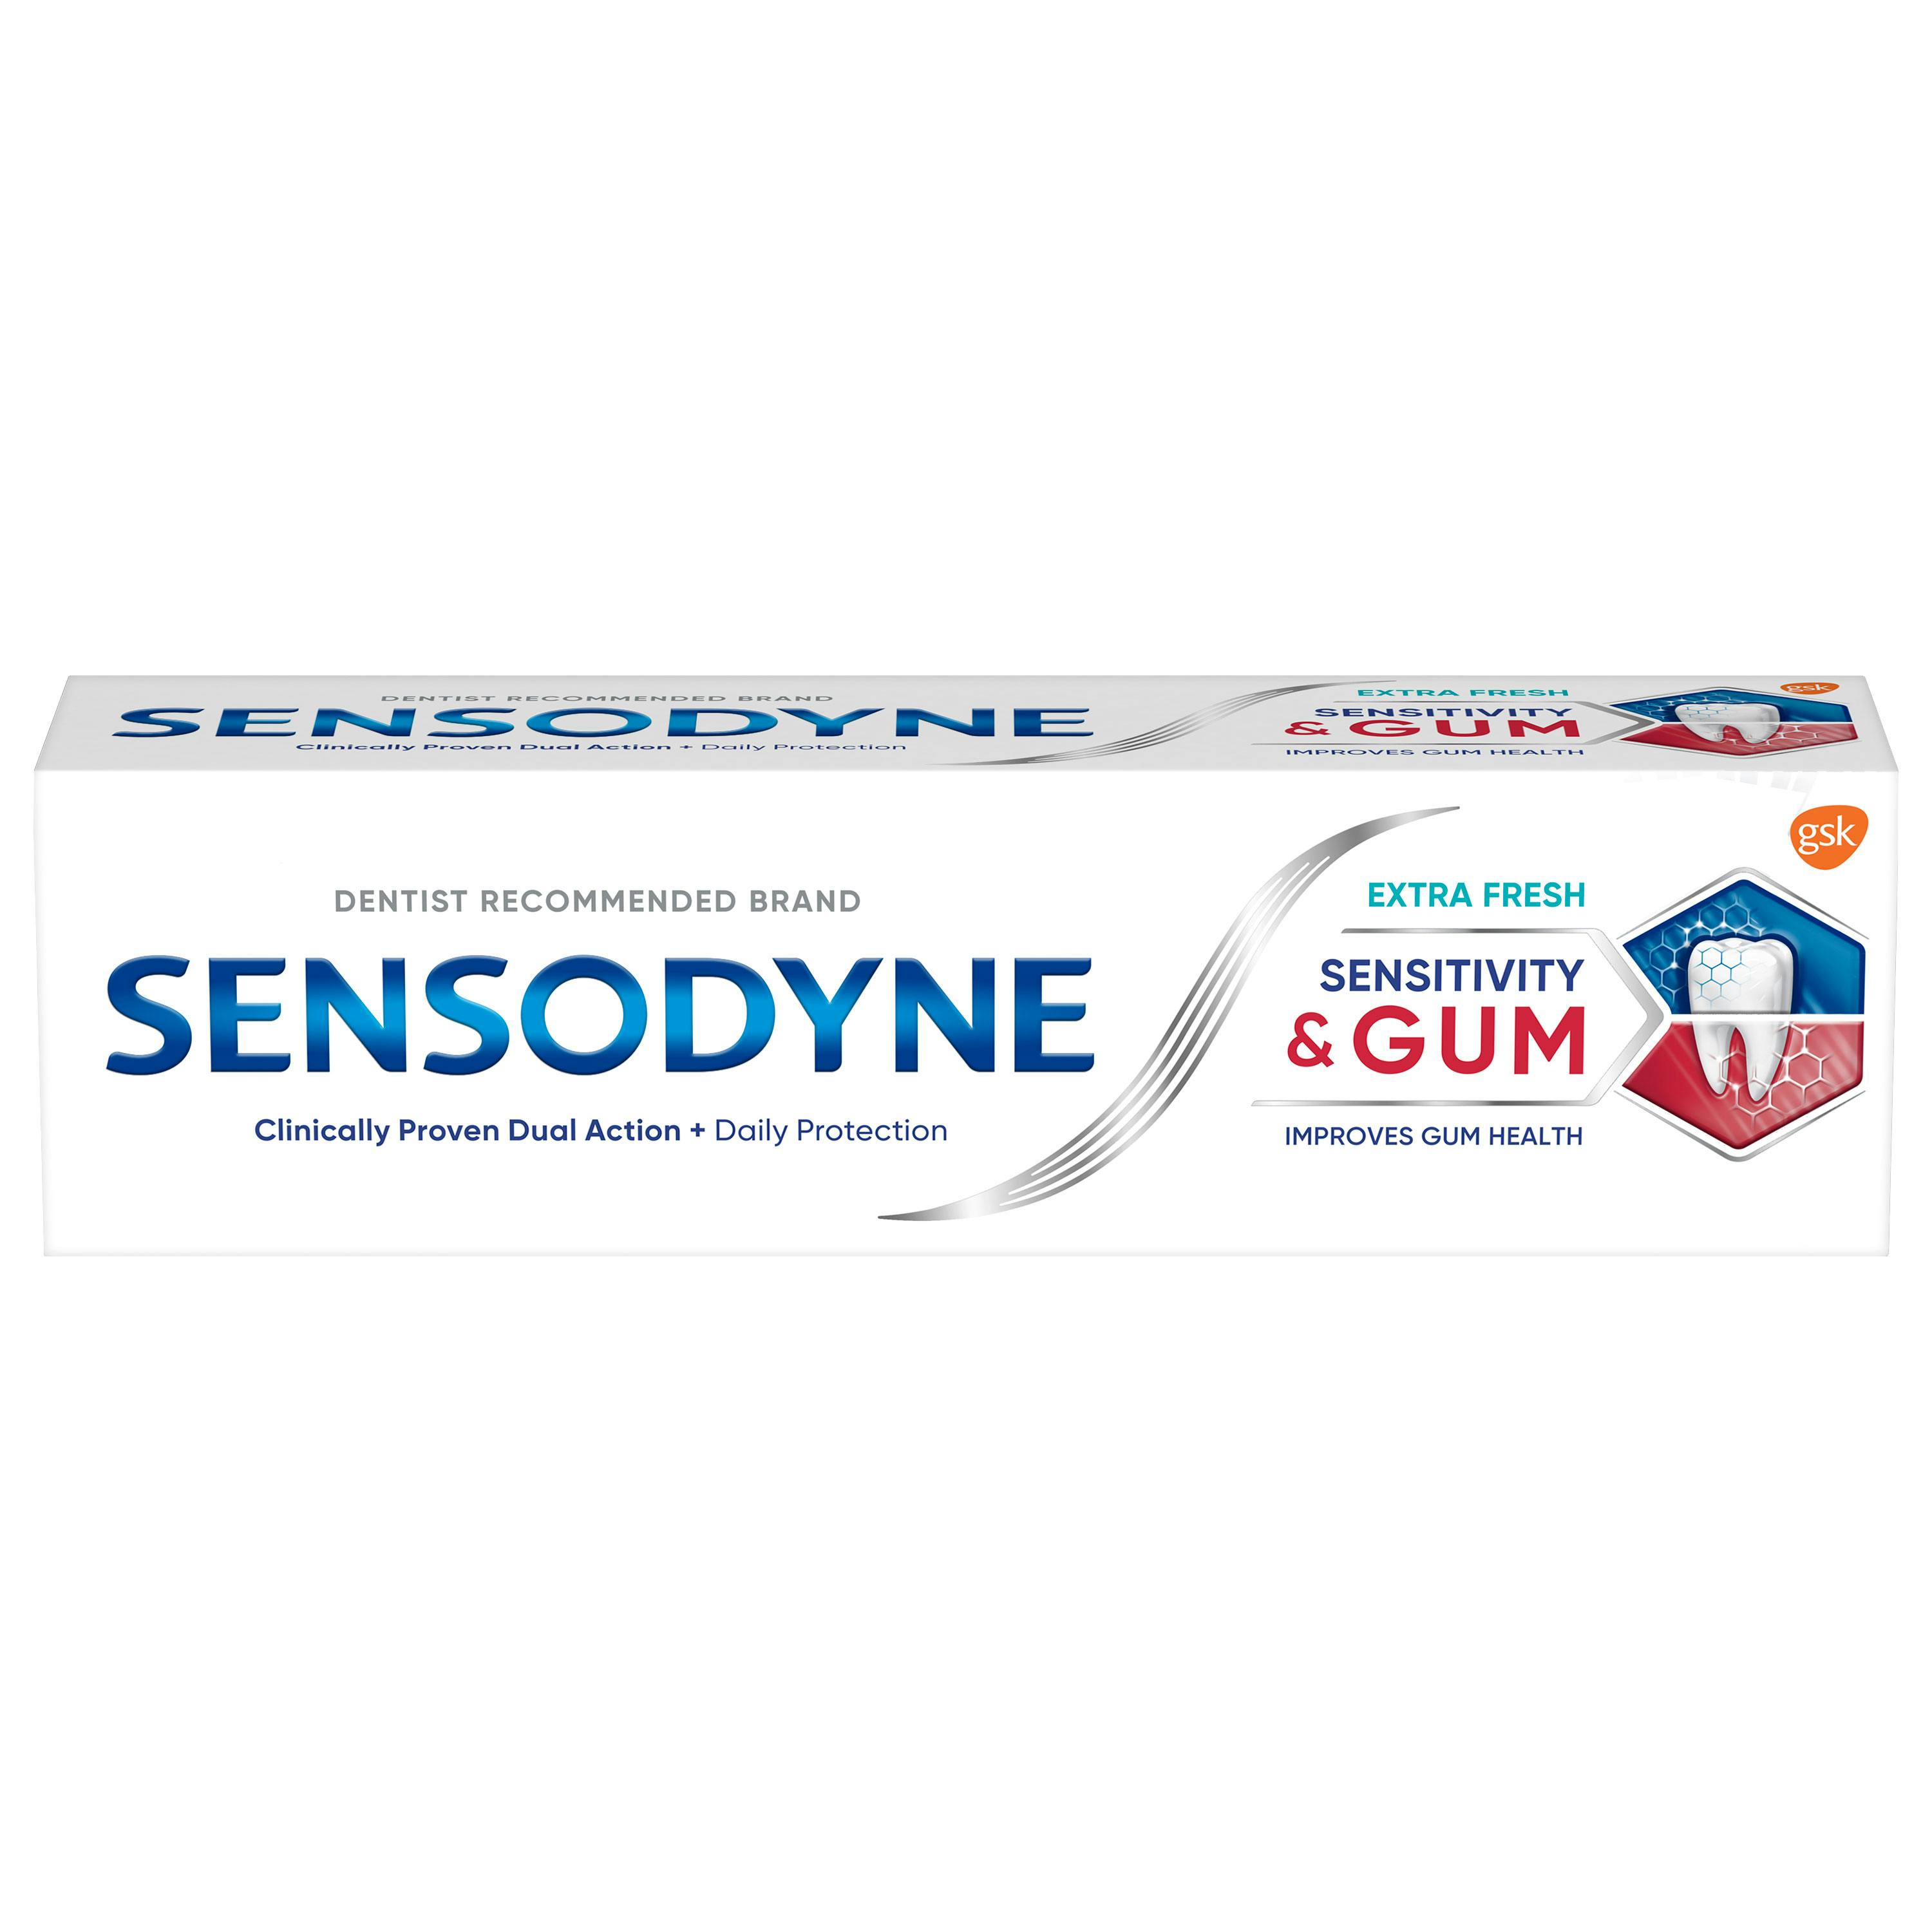 sensodyne-sensitivity-and-gum-whitening-toothpaste1